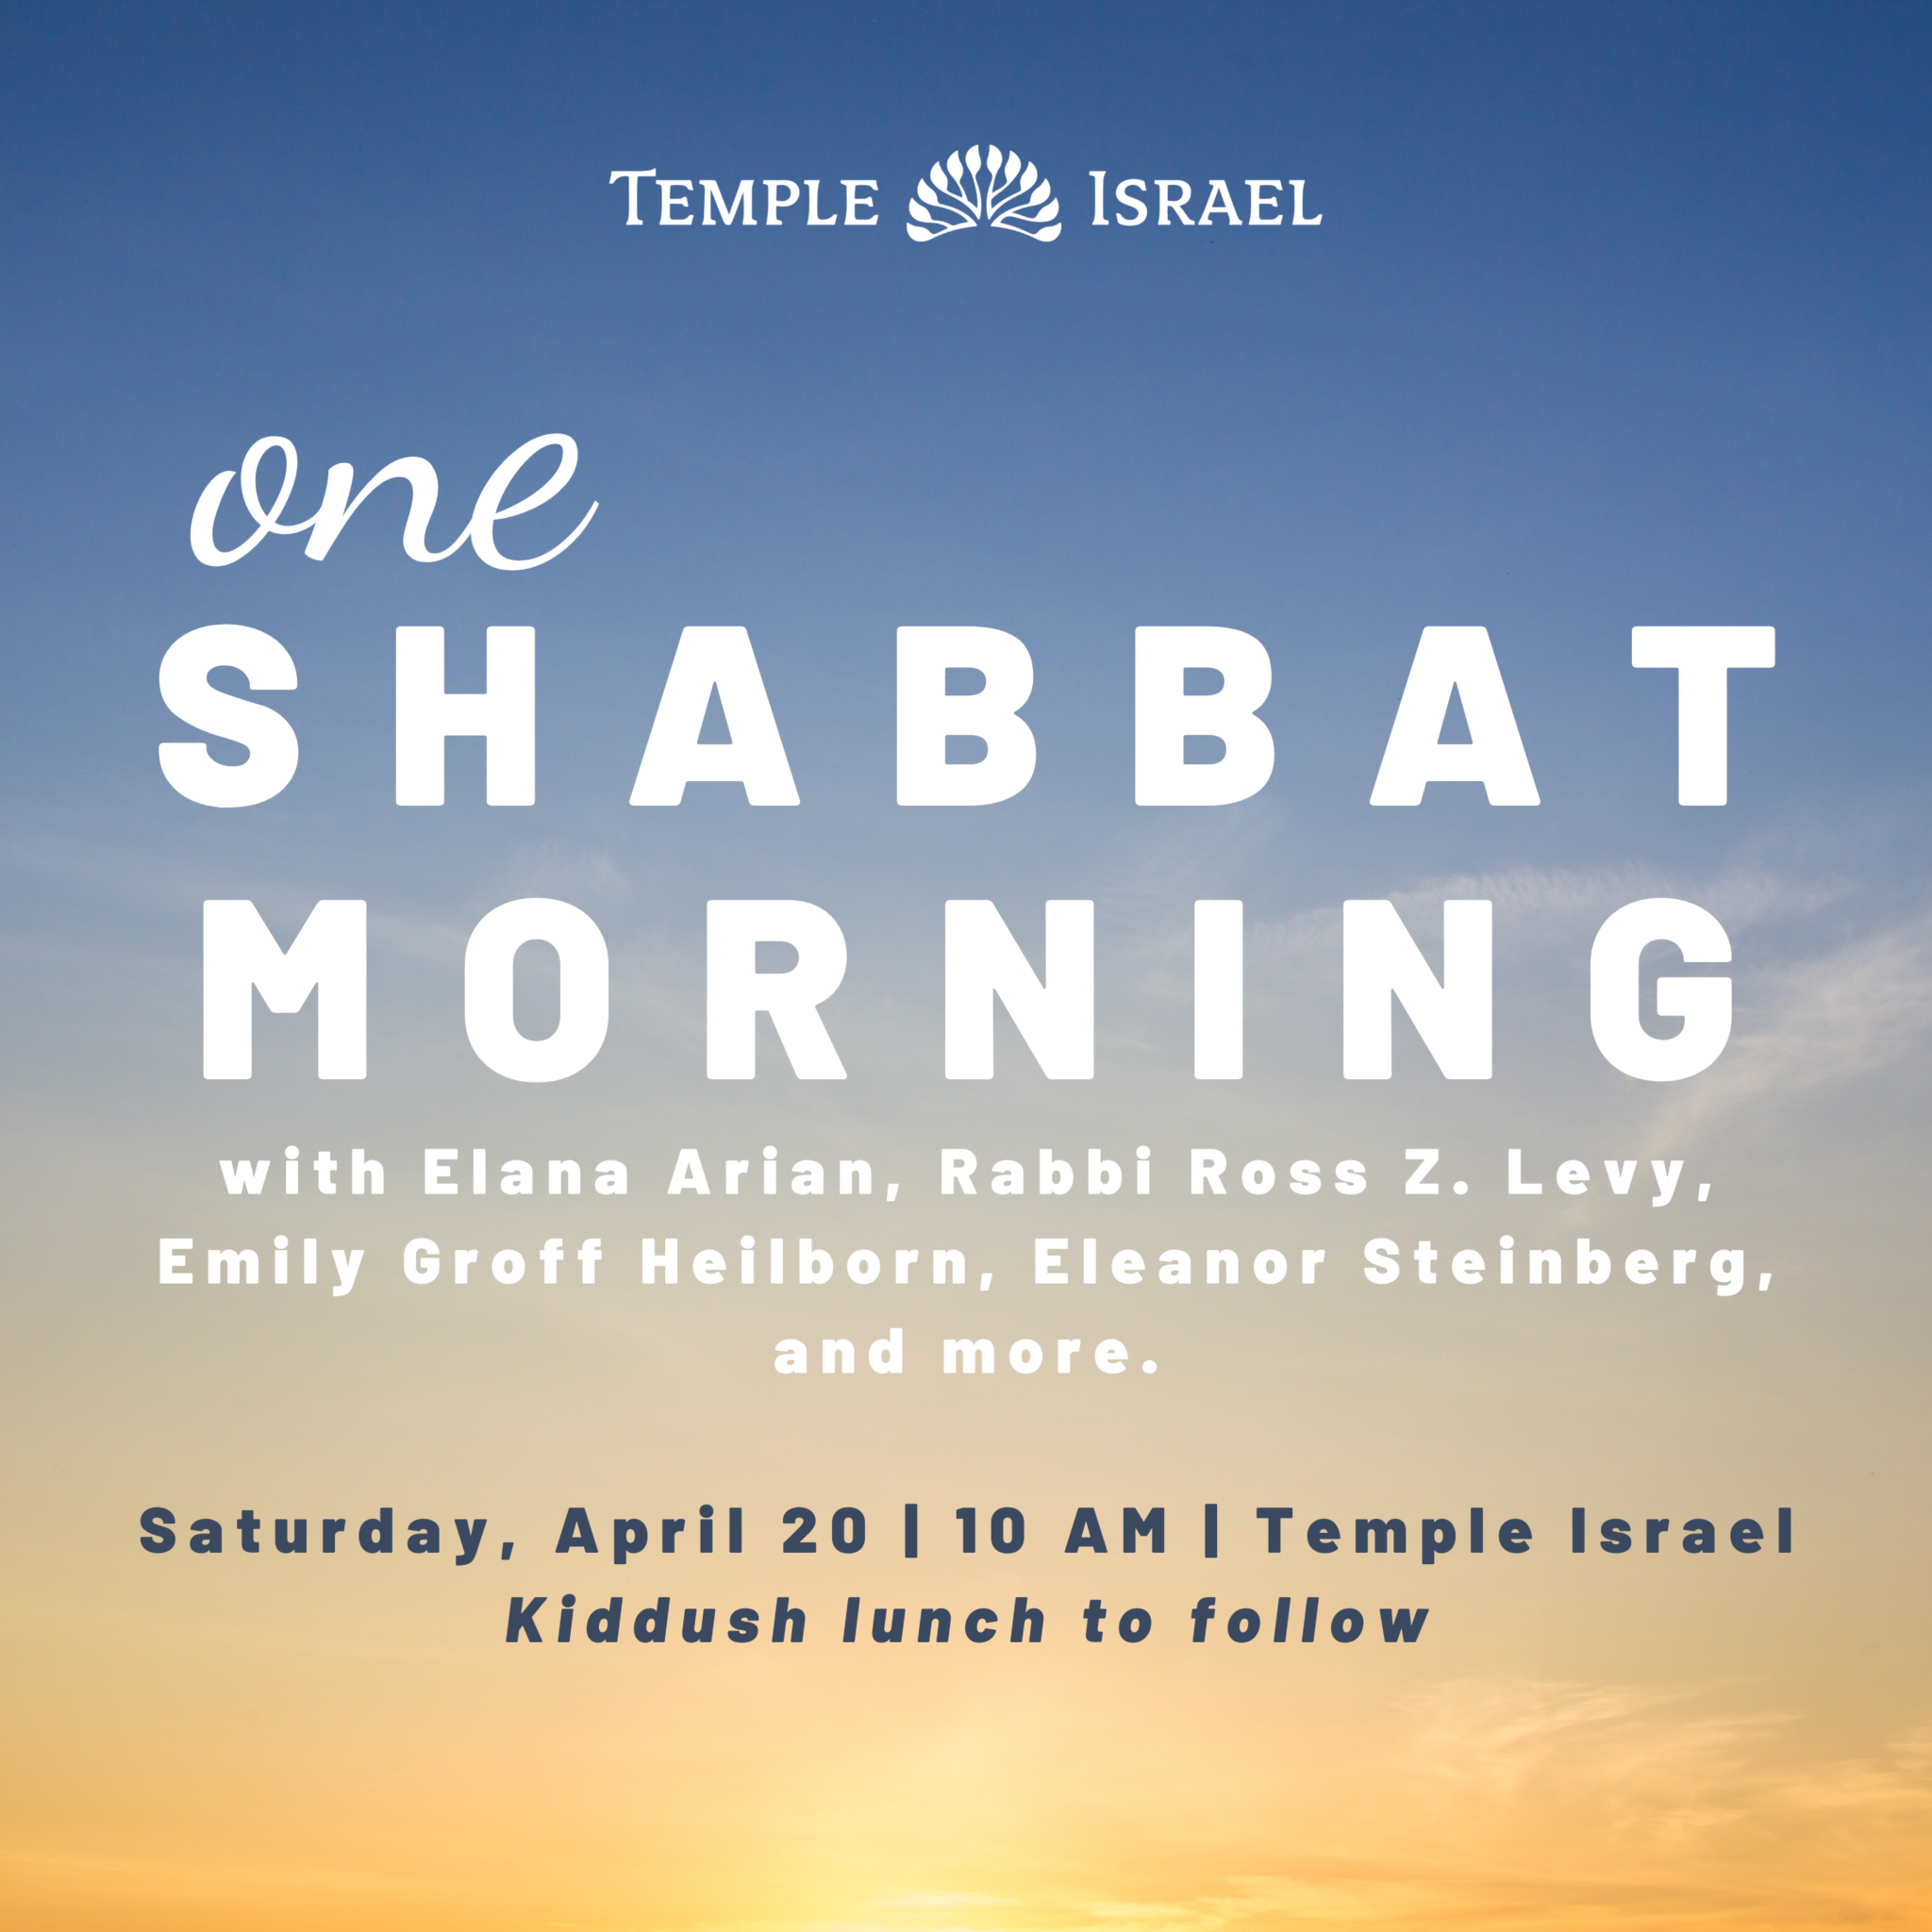 One Shabbat Morning with Elana Arian